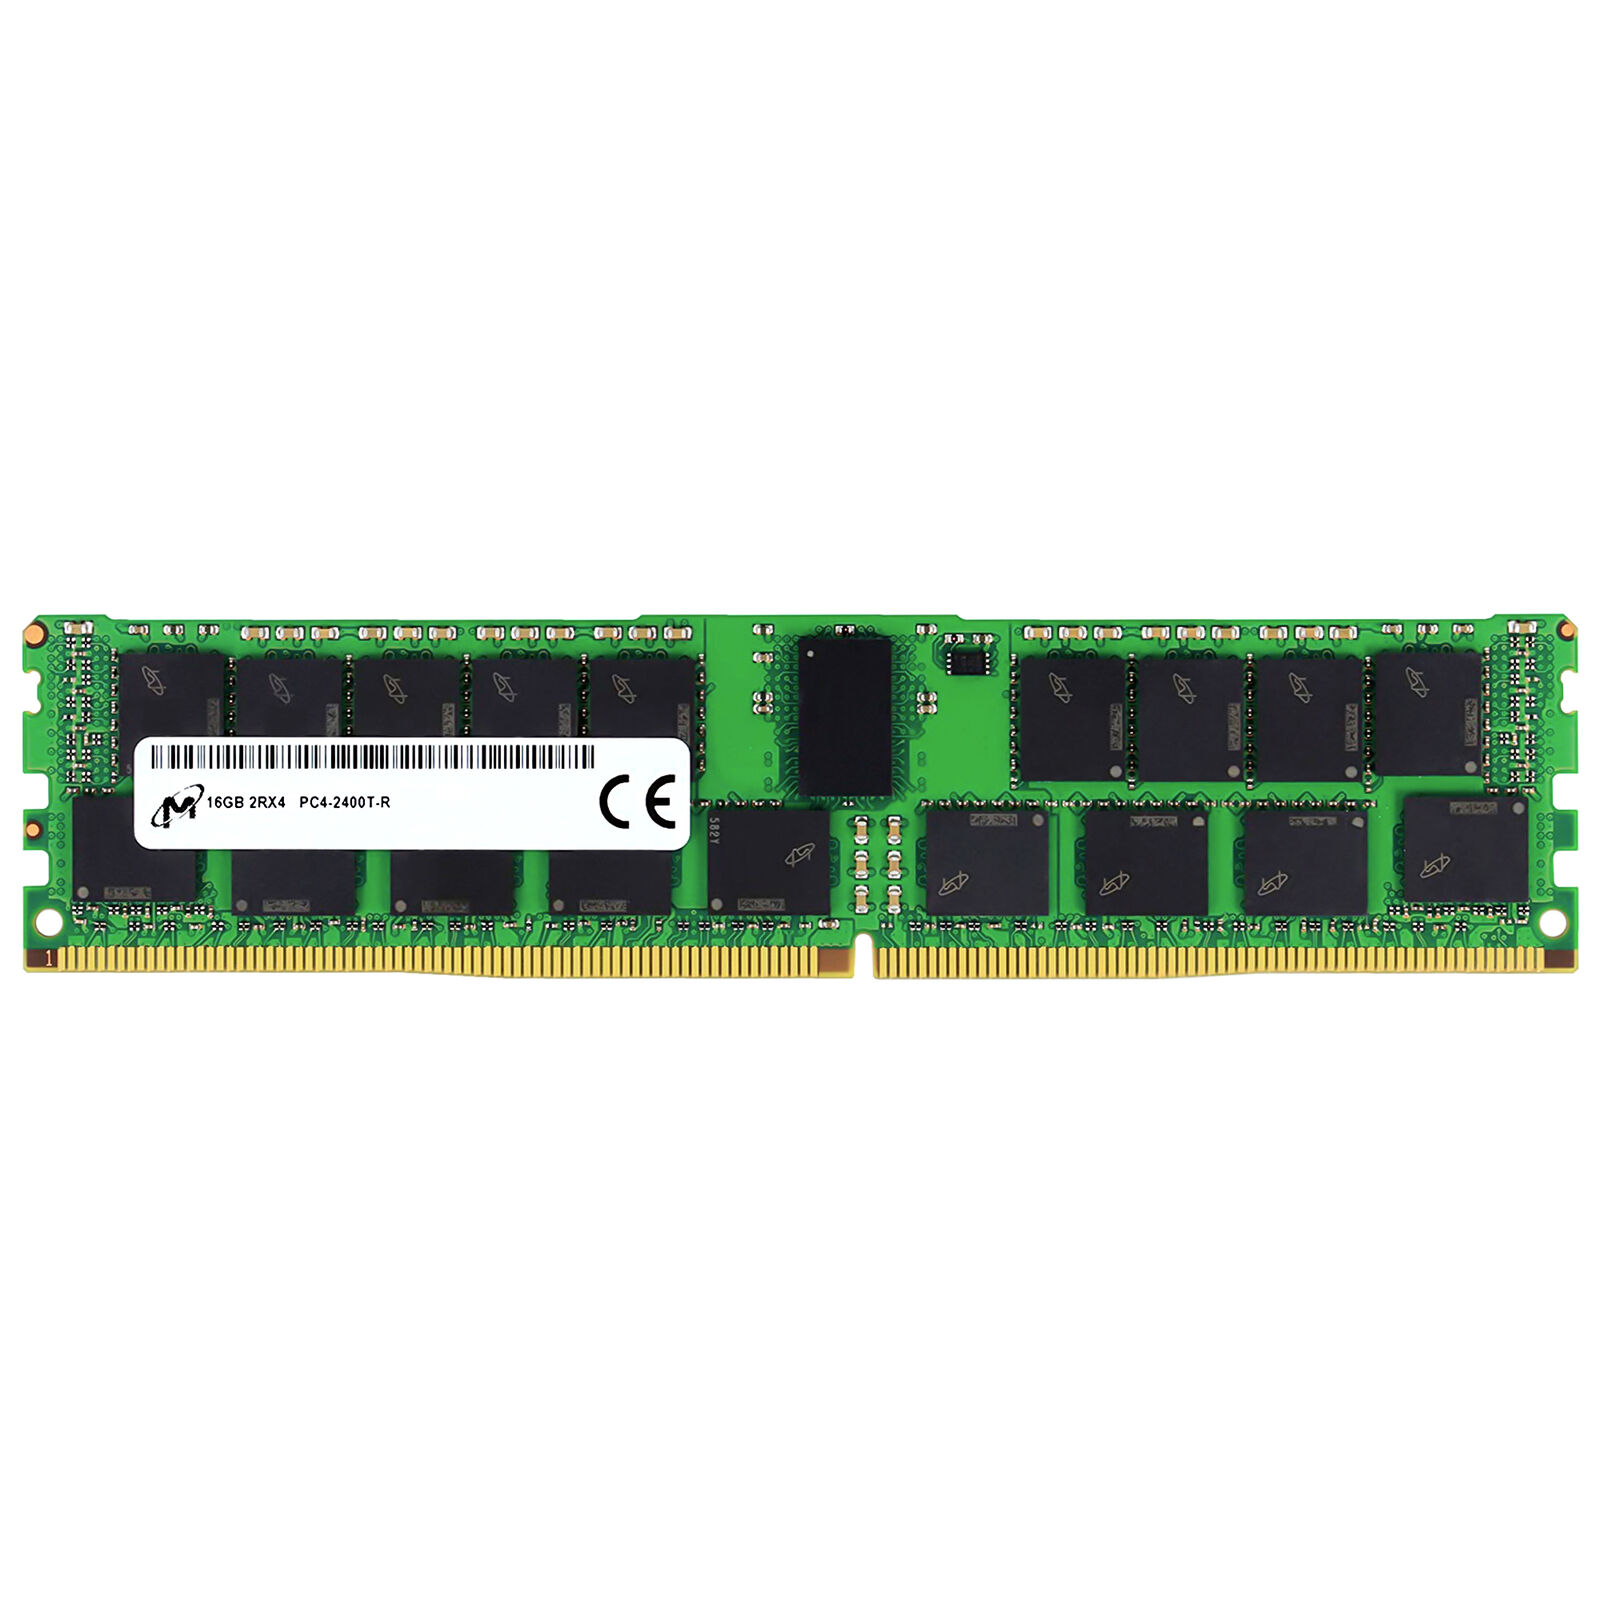 Micron 16GB 2Rx4 PC4-2400T RDIMM DDR4-19200 ECC REG Registered Server Memory RAM